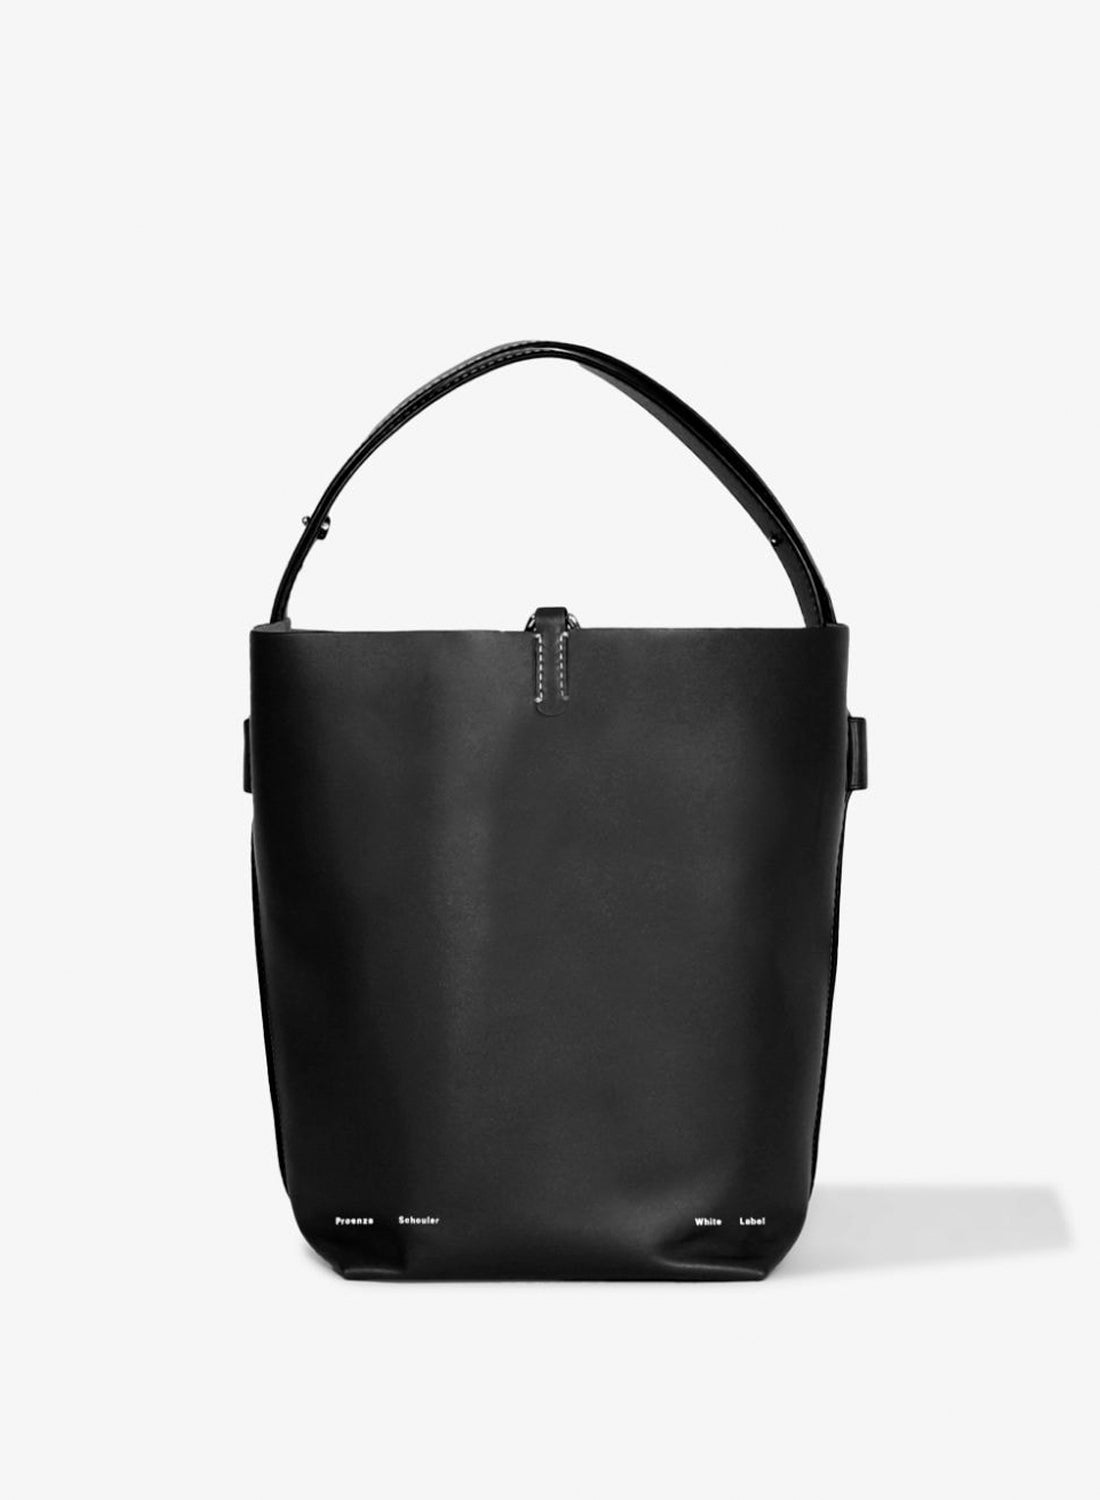 Proenza Schouler White Label Sullivan Leather Bag Black